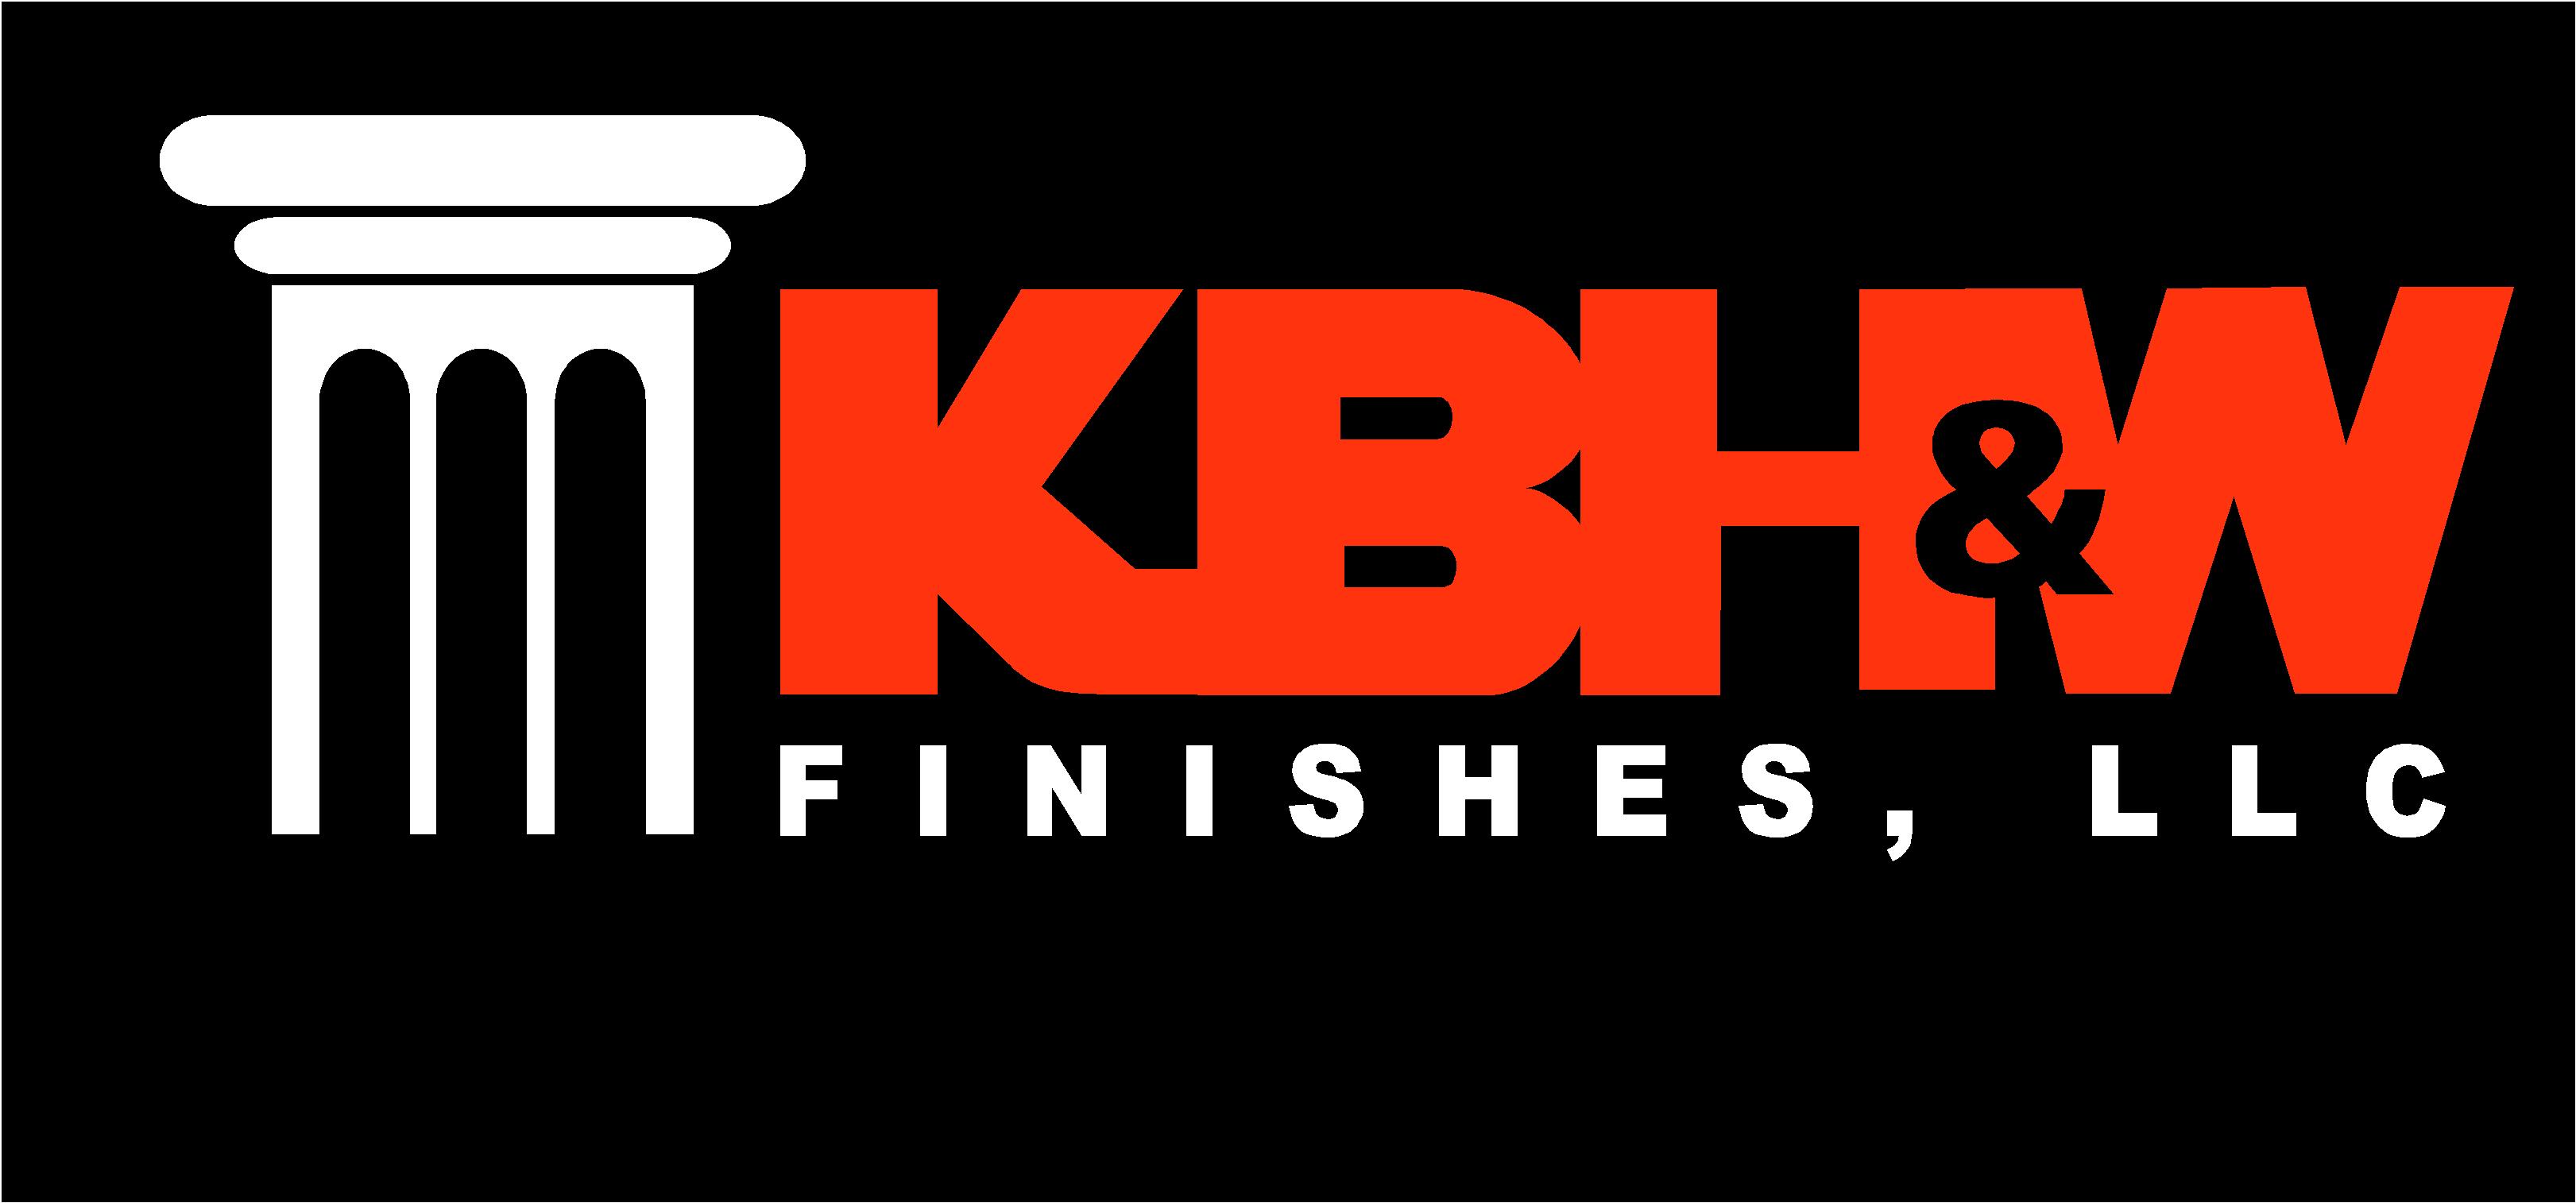 KBH&W logo